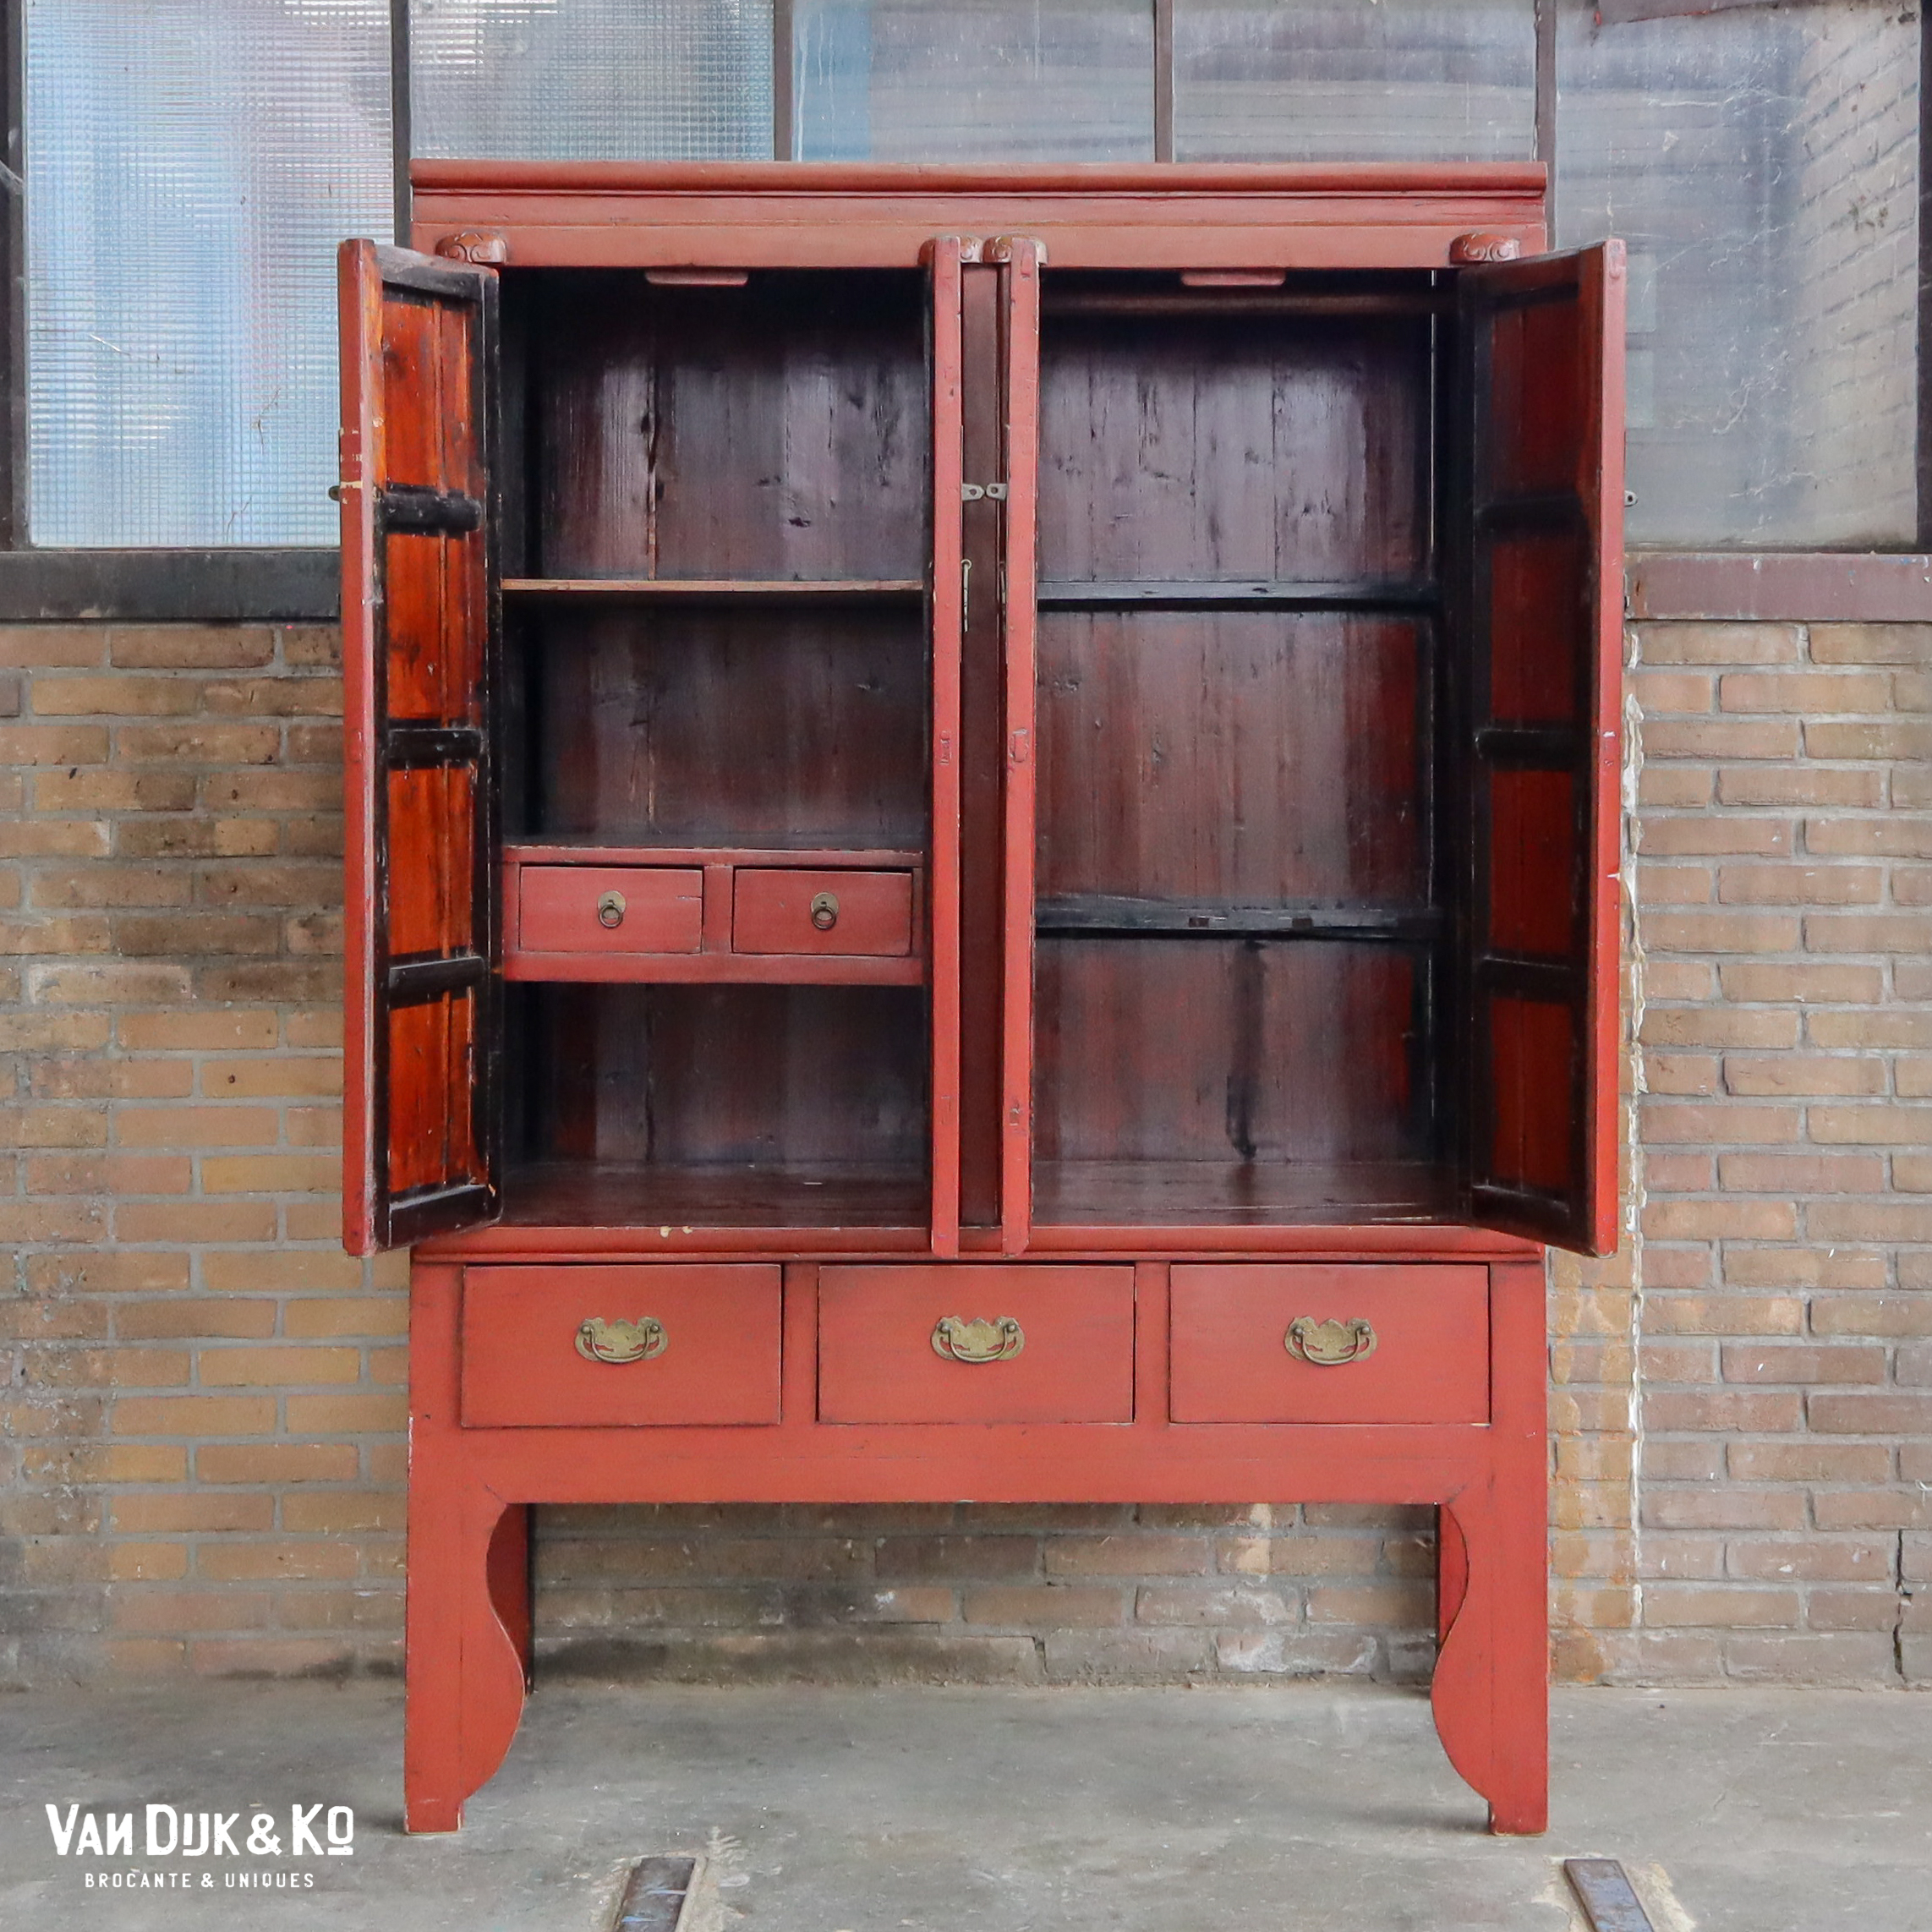 adelaar bouwer Darmen Antieke Chinese kledingkast » Van Dijk & Ko